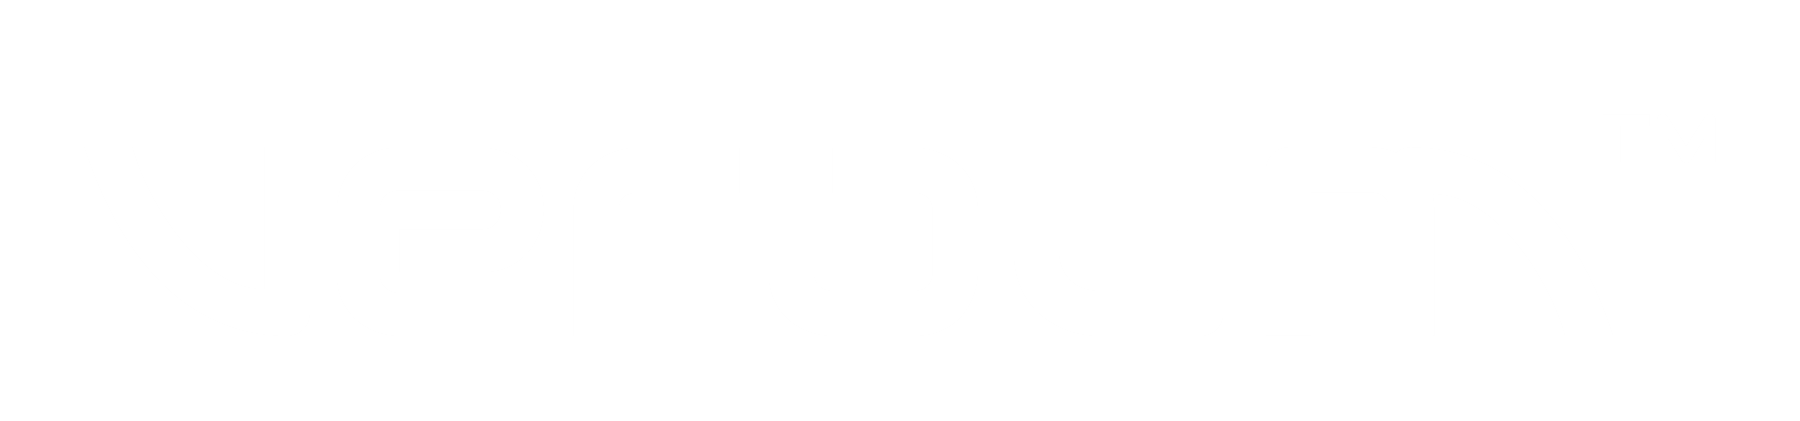 Verbum-logo-1